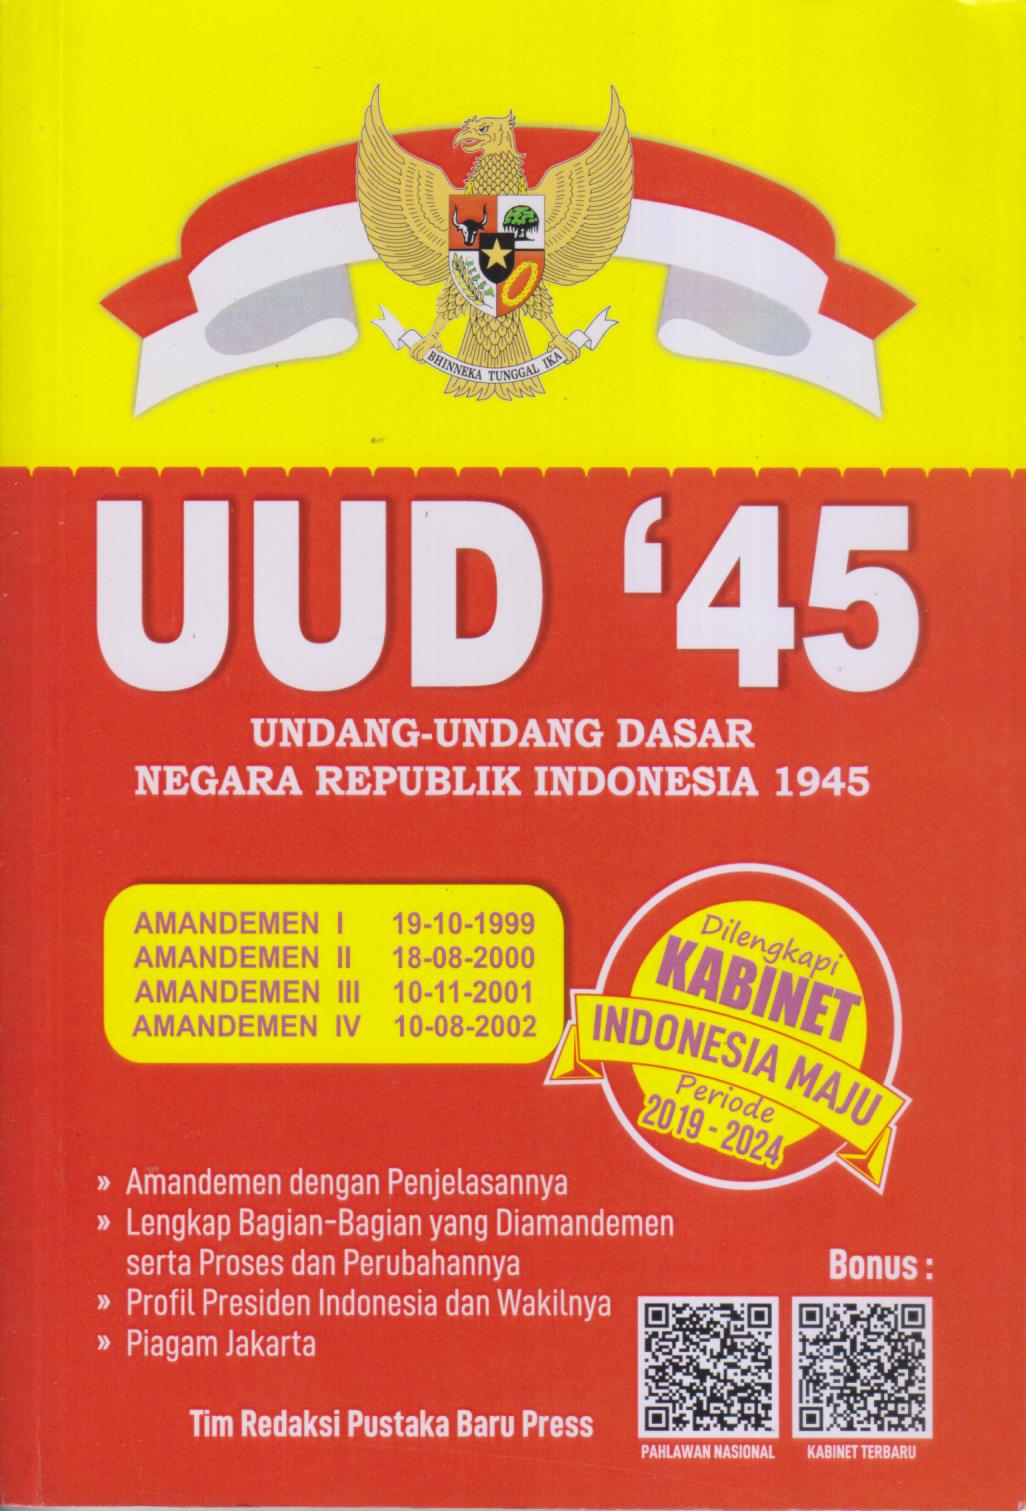 UUD '45 UNDANG-UNDANG DASAR NEGARA REPUBLIK INDONESIA 1945